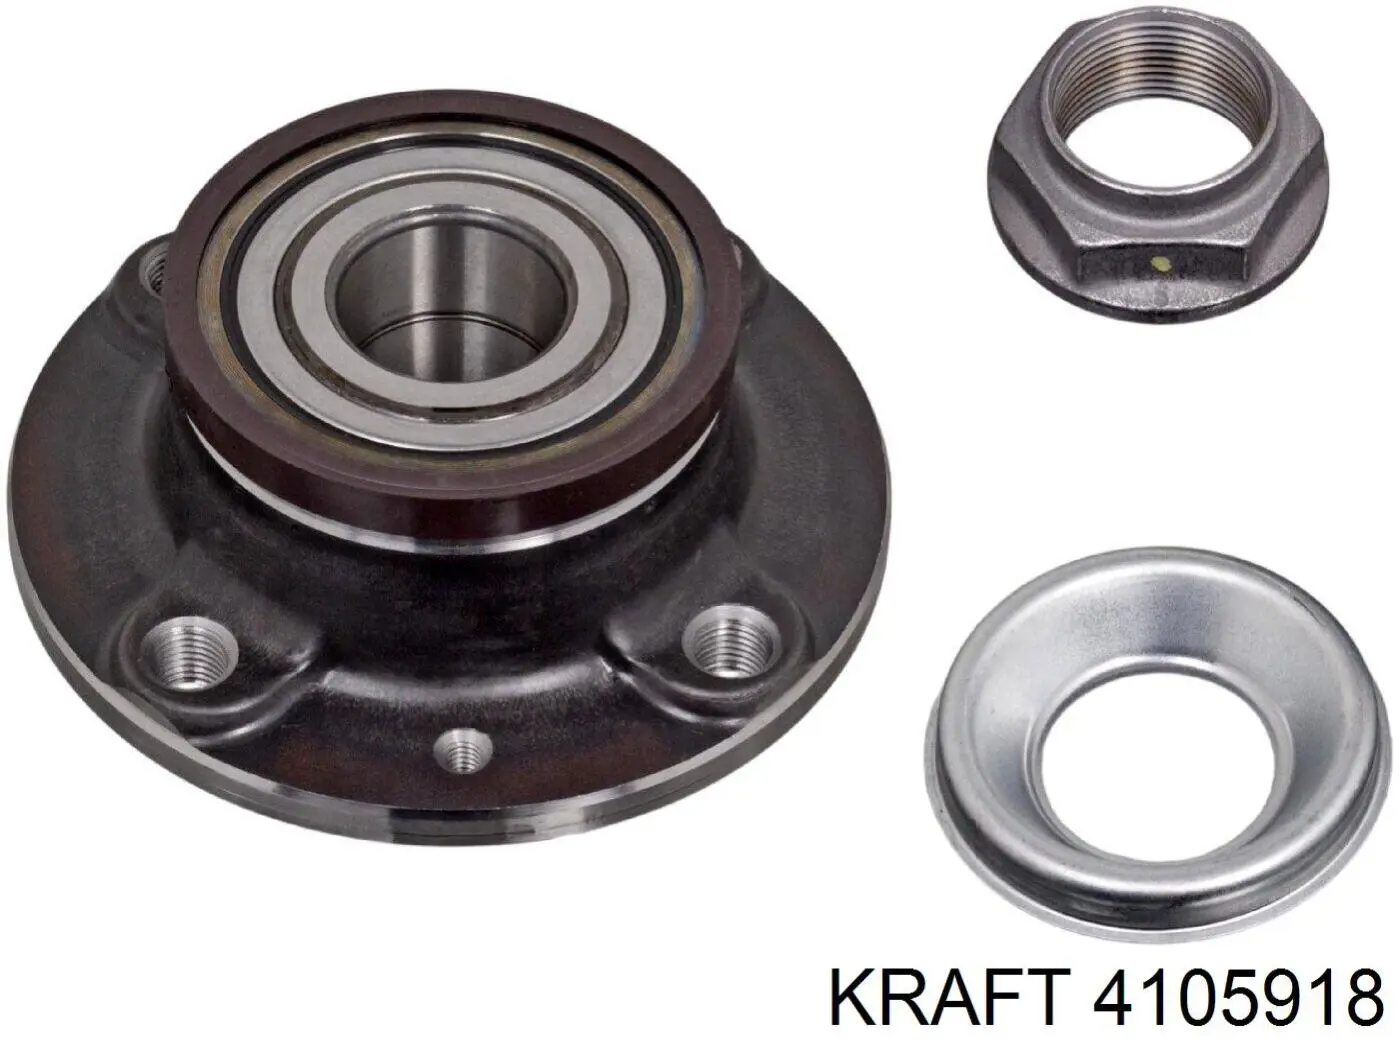 4105918 Kraft ступица задняя